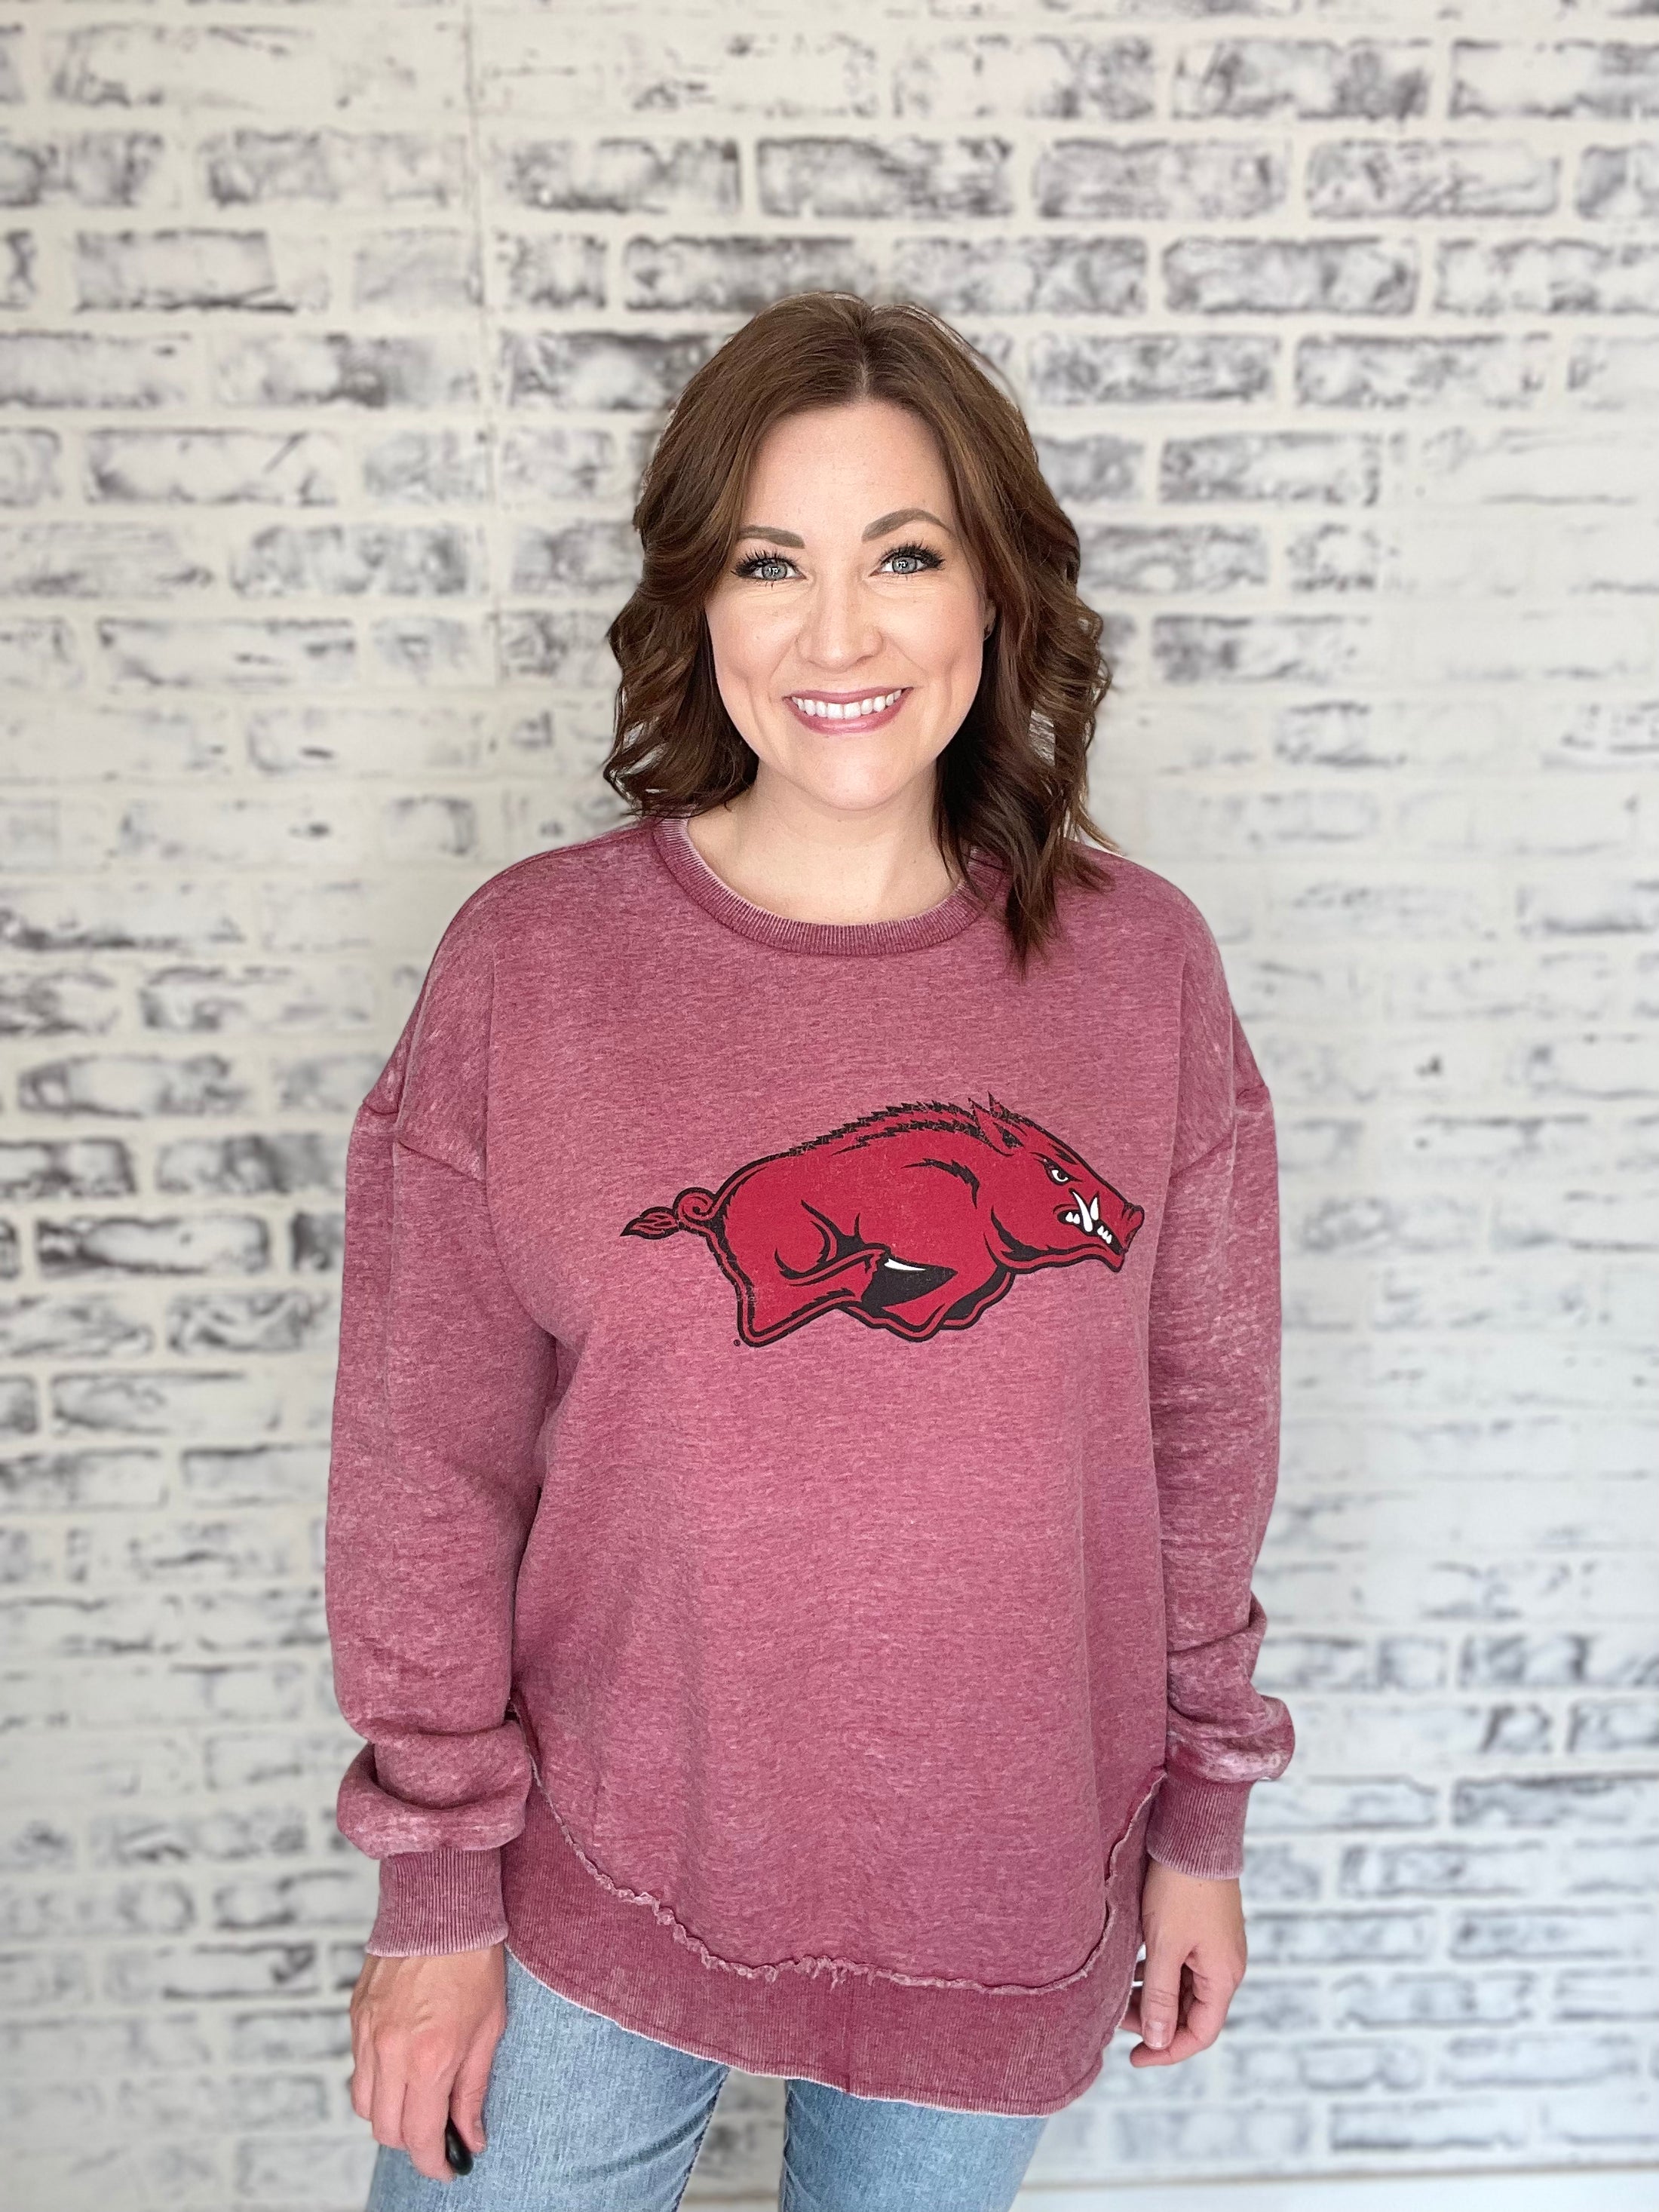 RZBK Sweatshirt with Hog on the front